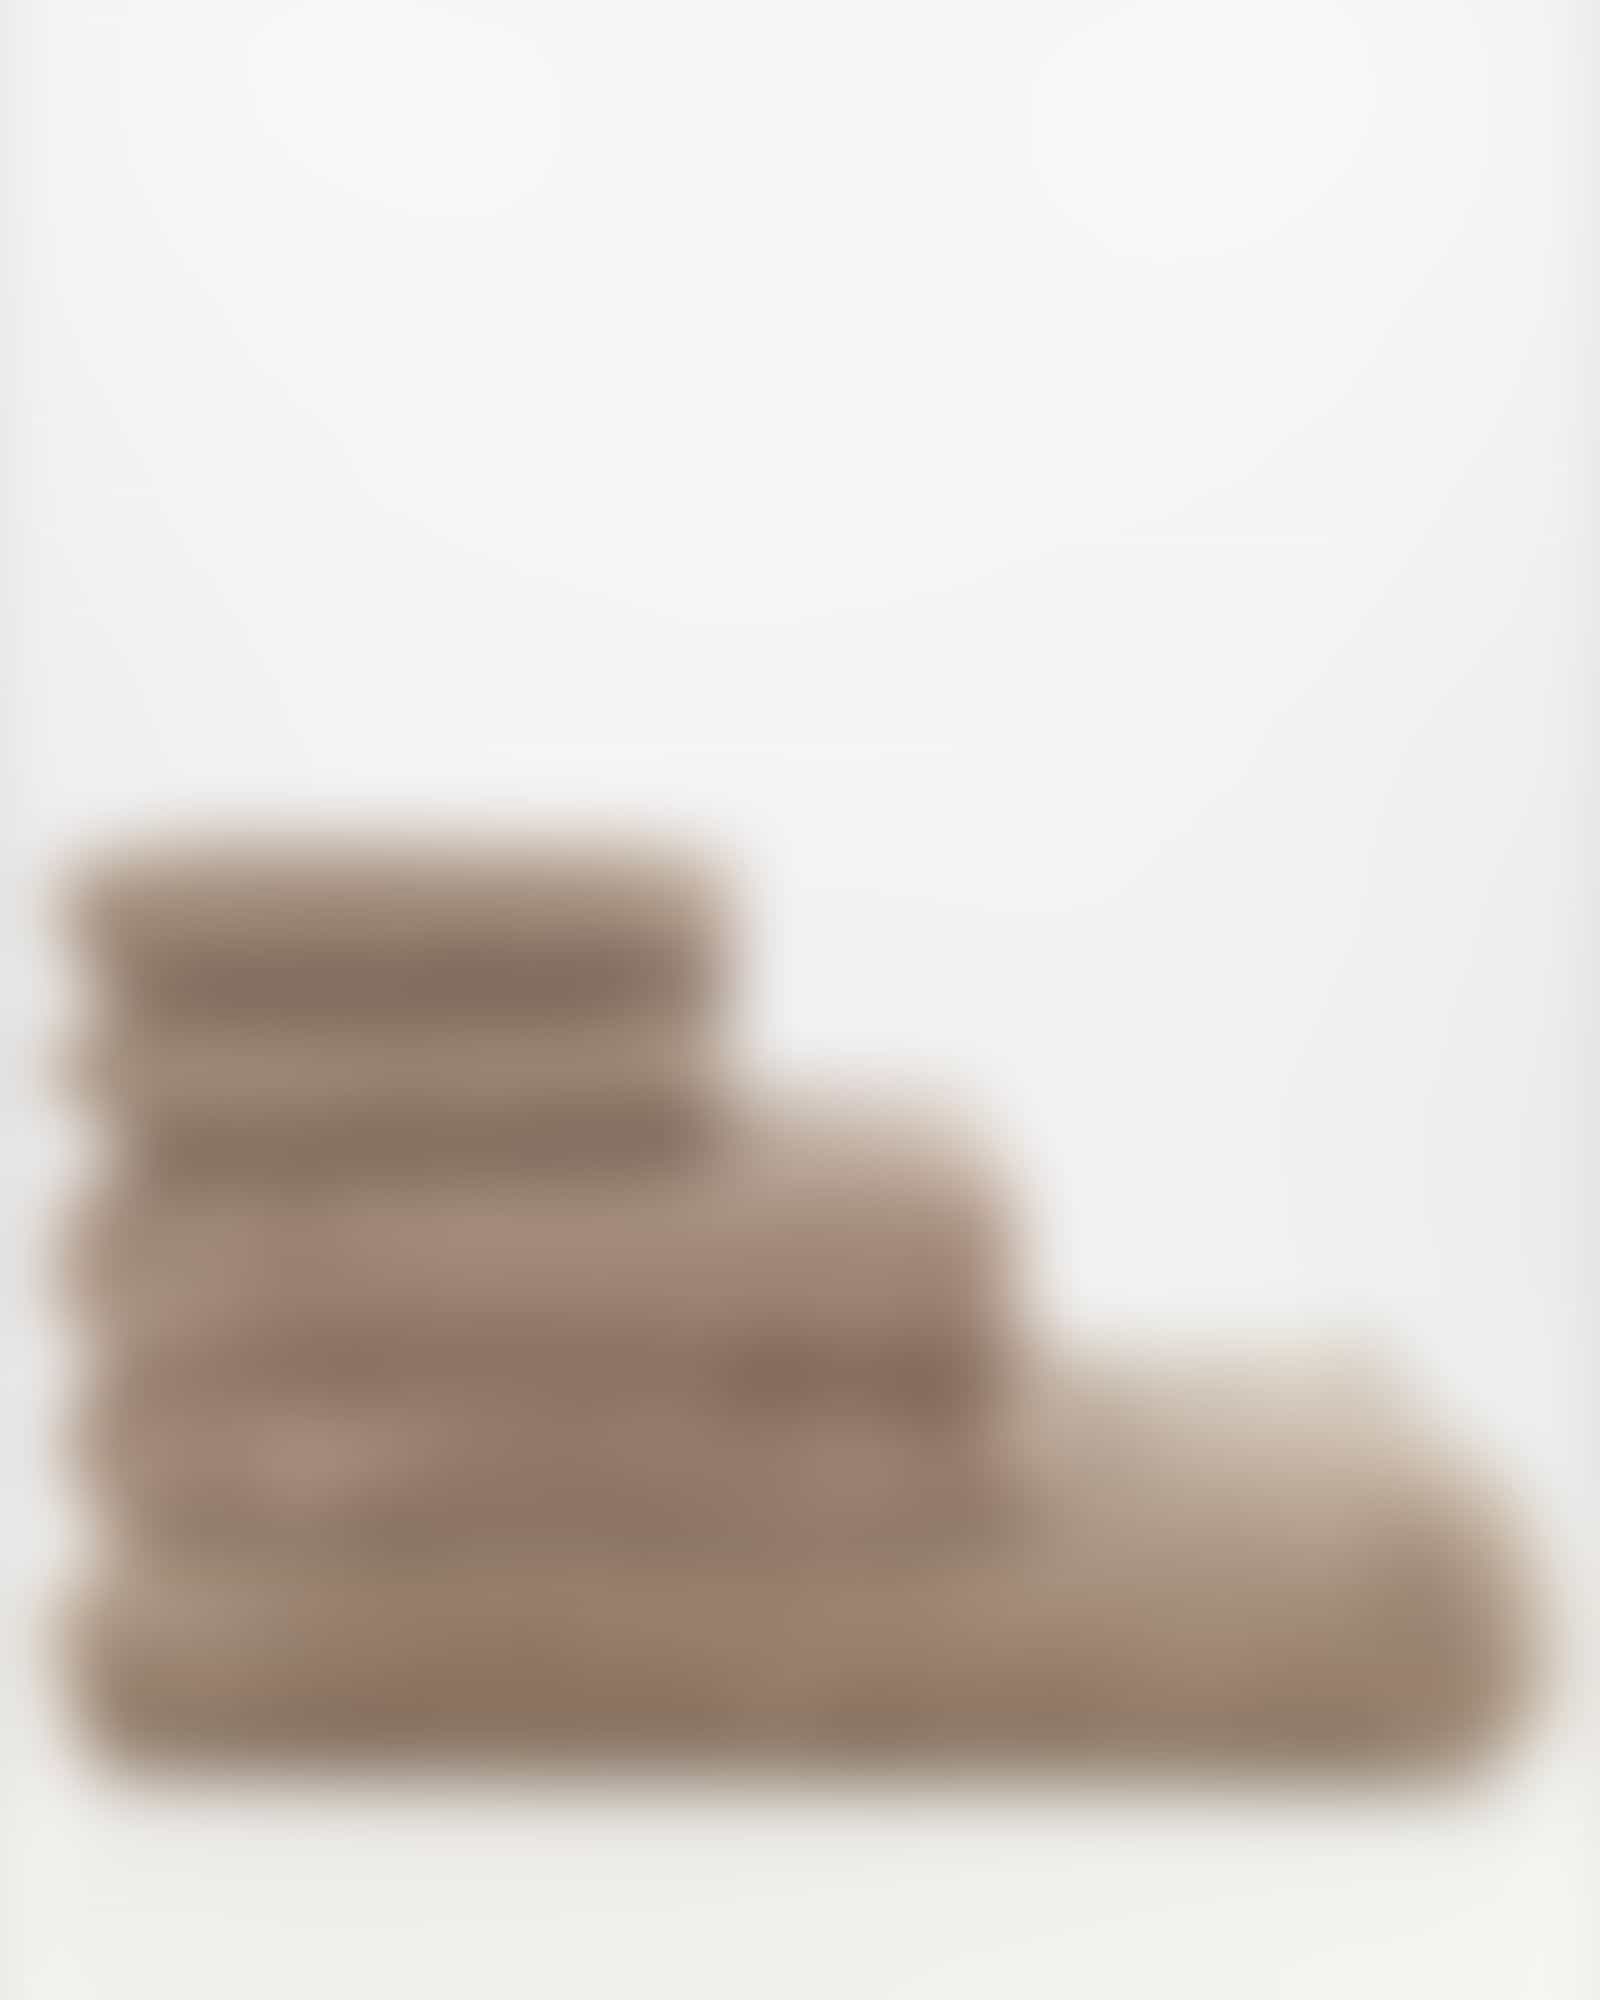 JOOP Tone Doubleface 1689 - Farbe: Sand - 37 - Waschhandschuh 16x22 cm